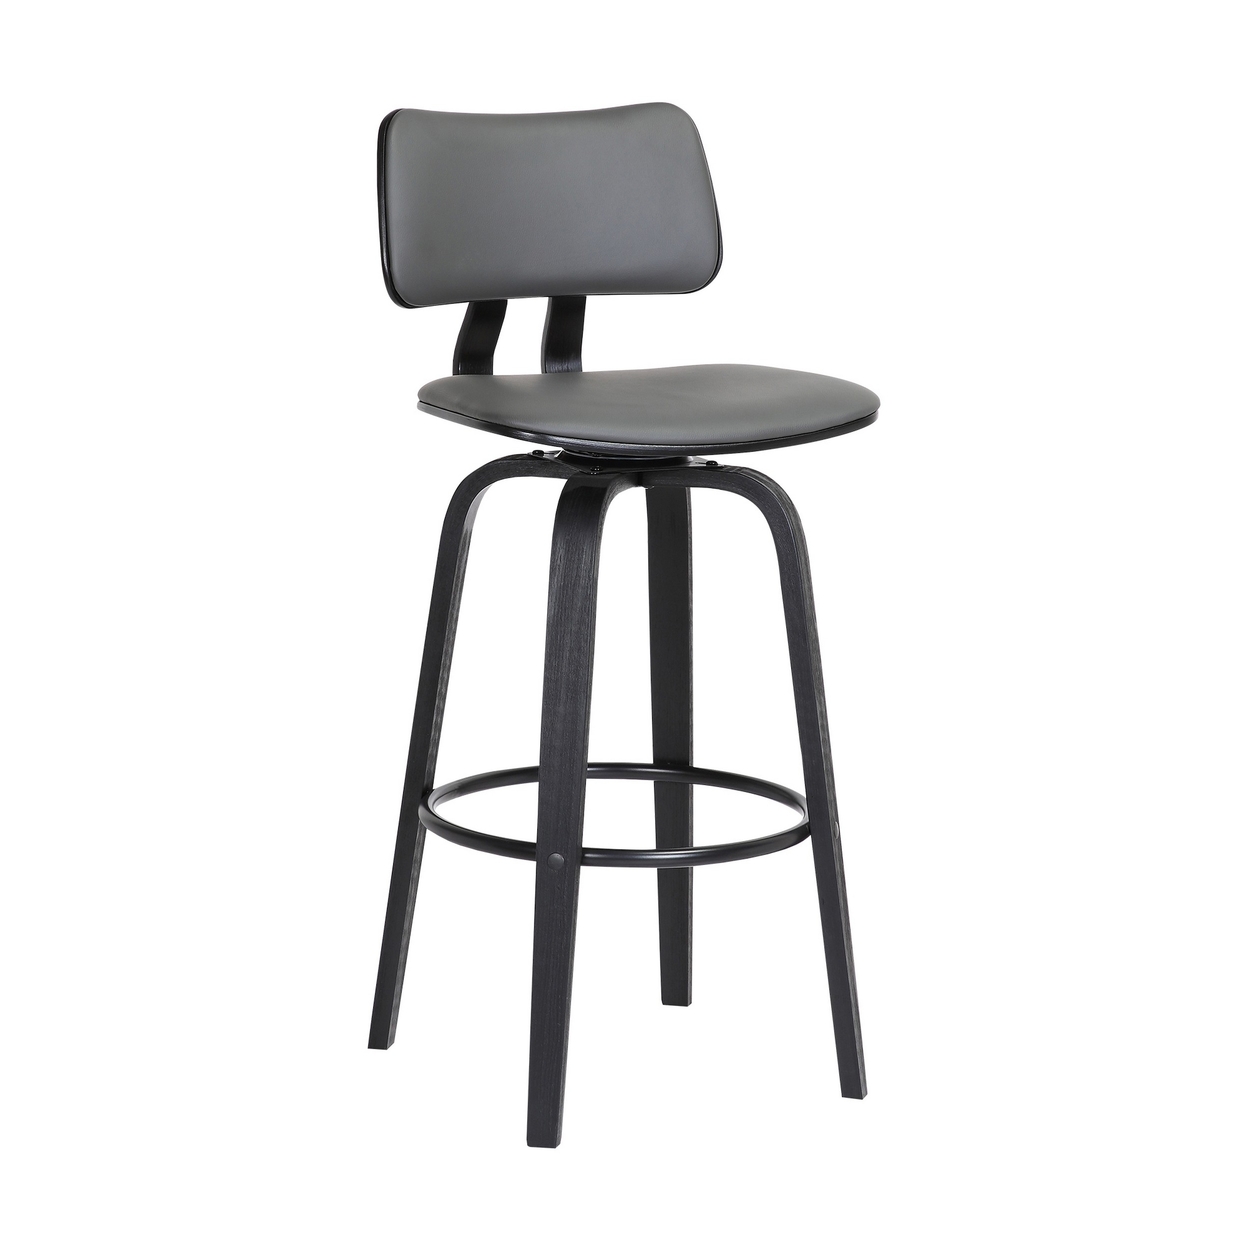 Pino 30 Inch Swivel Barstool Chair, Gray Faux Leather, Black Wood Legs - Saltoro Sherpi